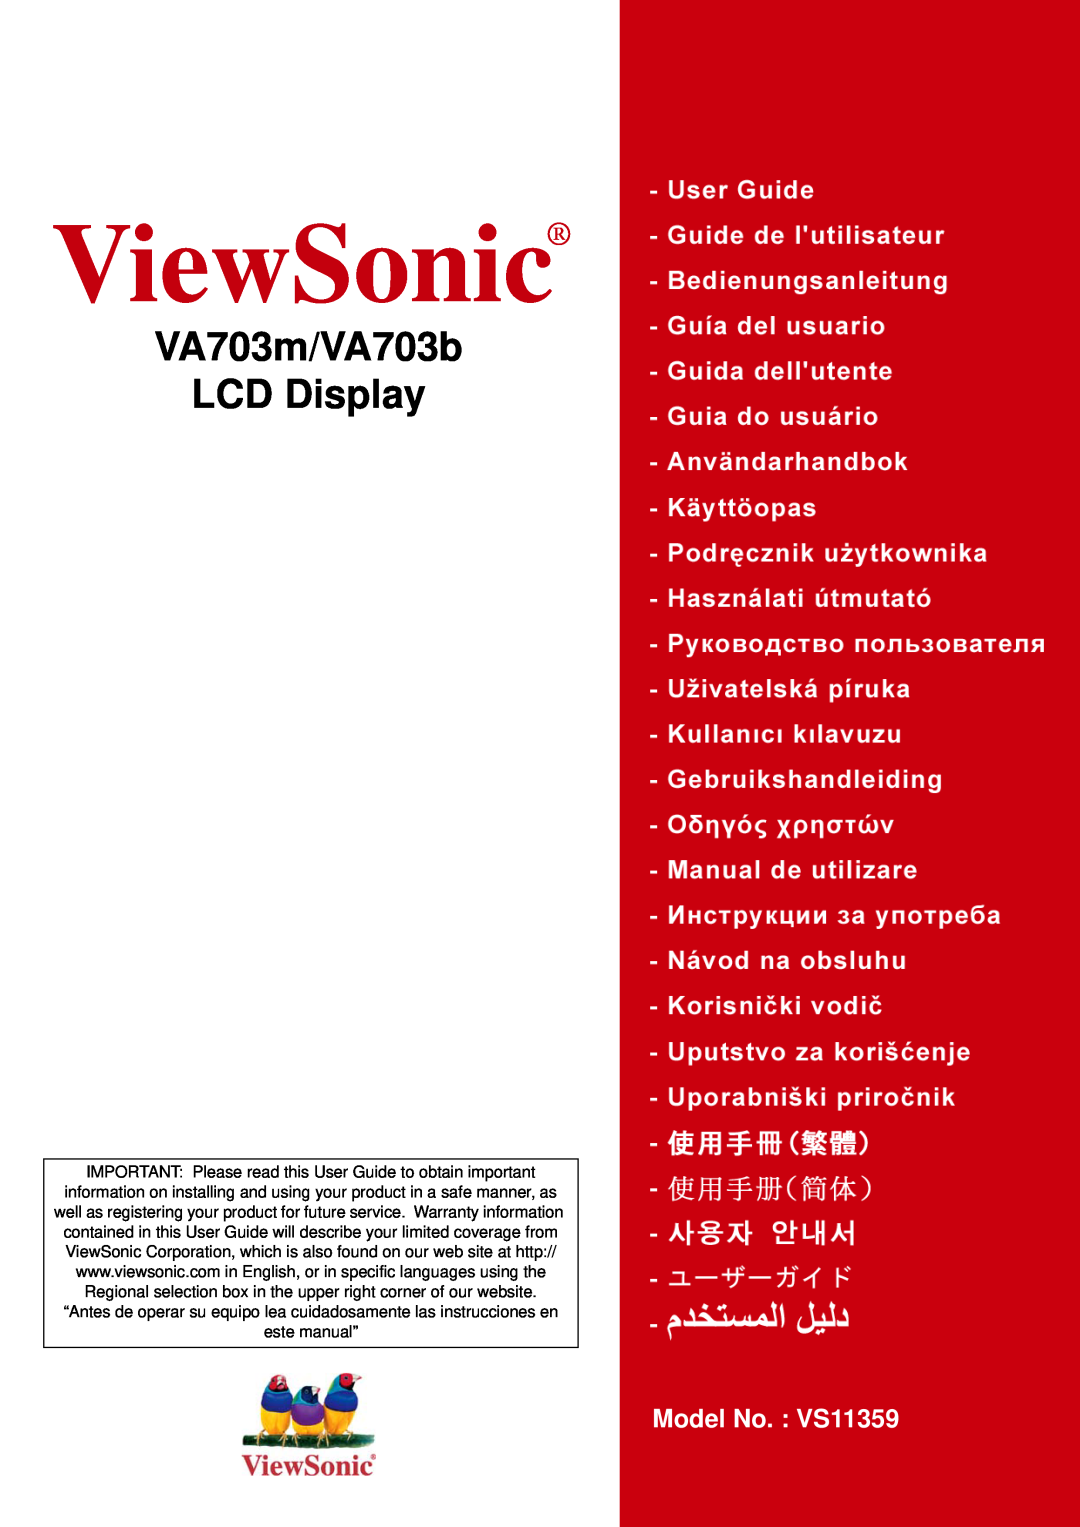 ViewSonic VA703M manual ViewSonic, VA703m LCD Display, Model No. : VS11280 